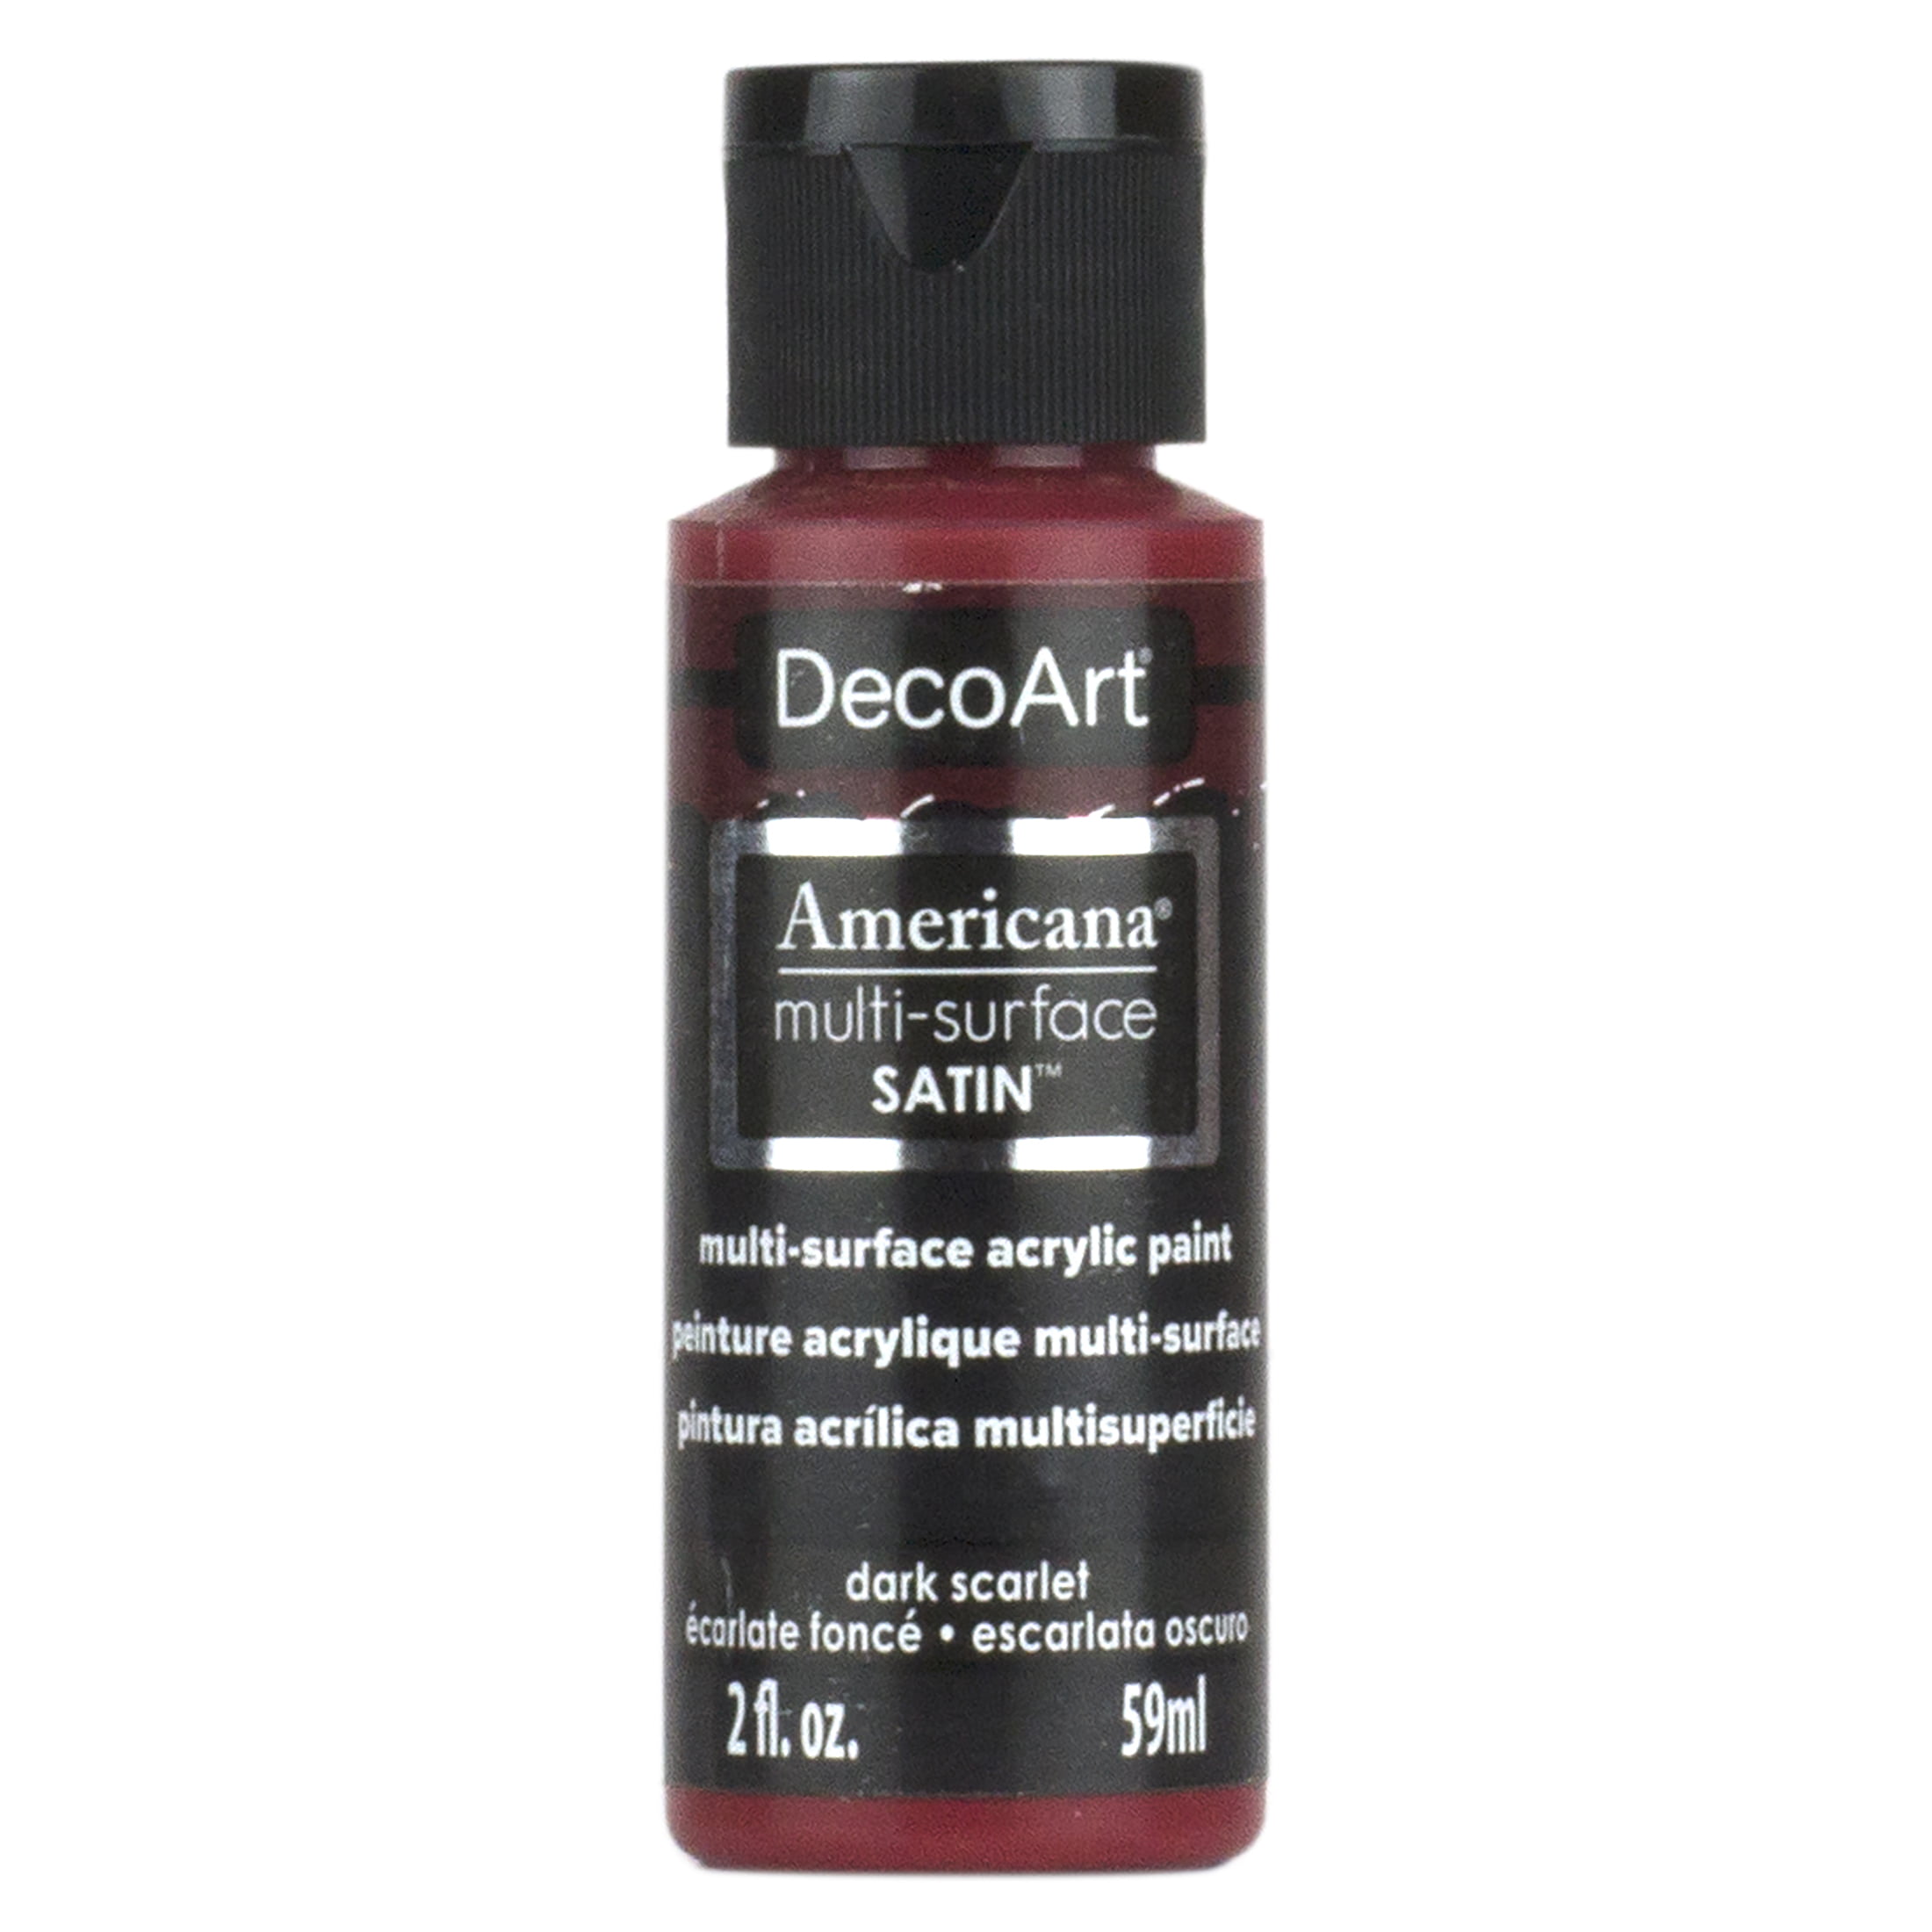 DecoArt Americana Acrylic Paint 2 fl oz LOWEST PRICE GUARANTEE